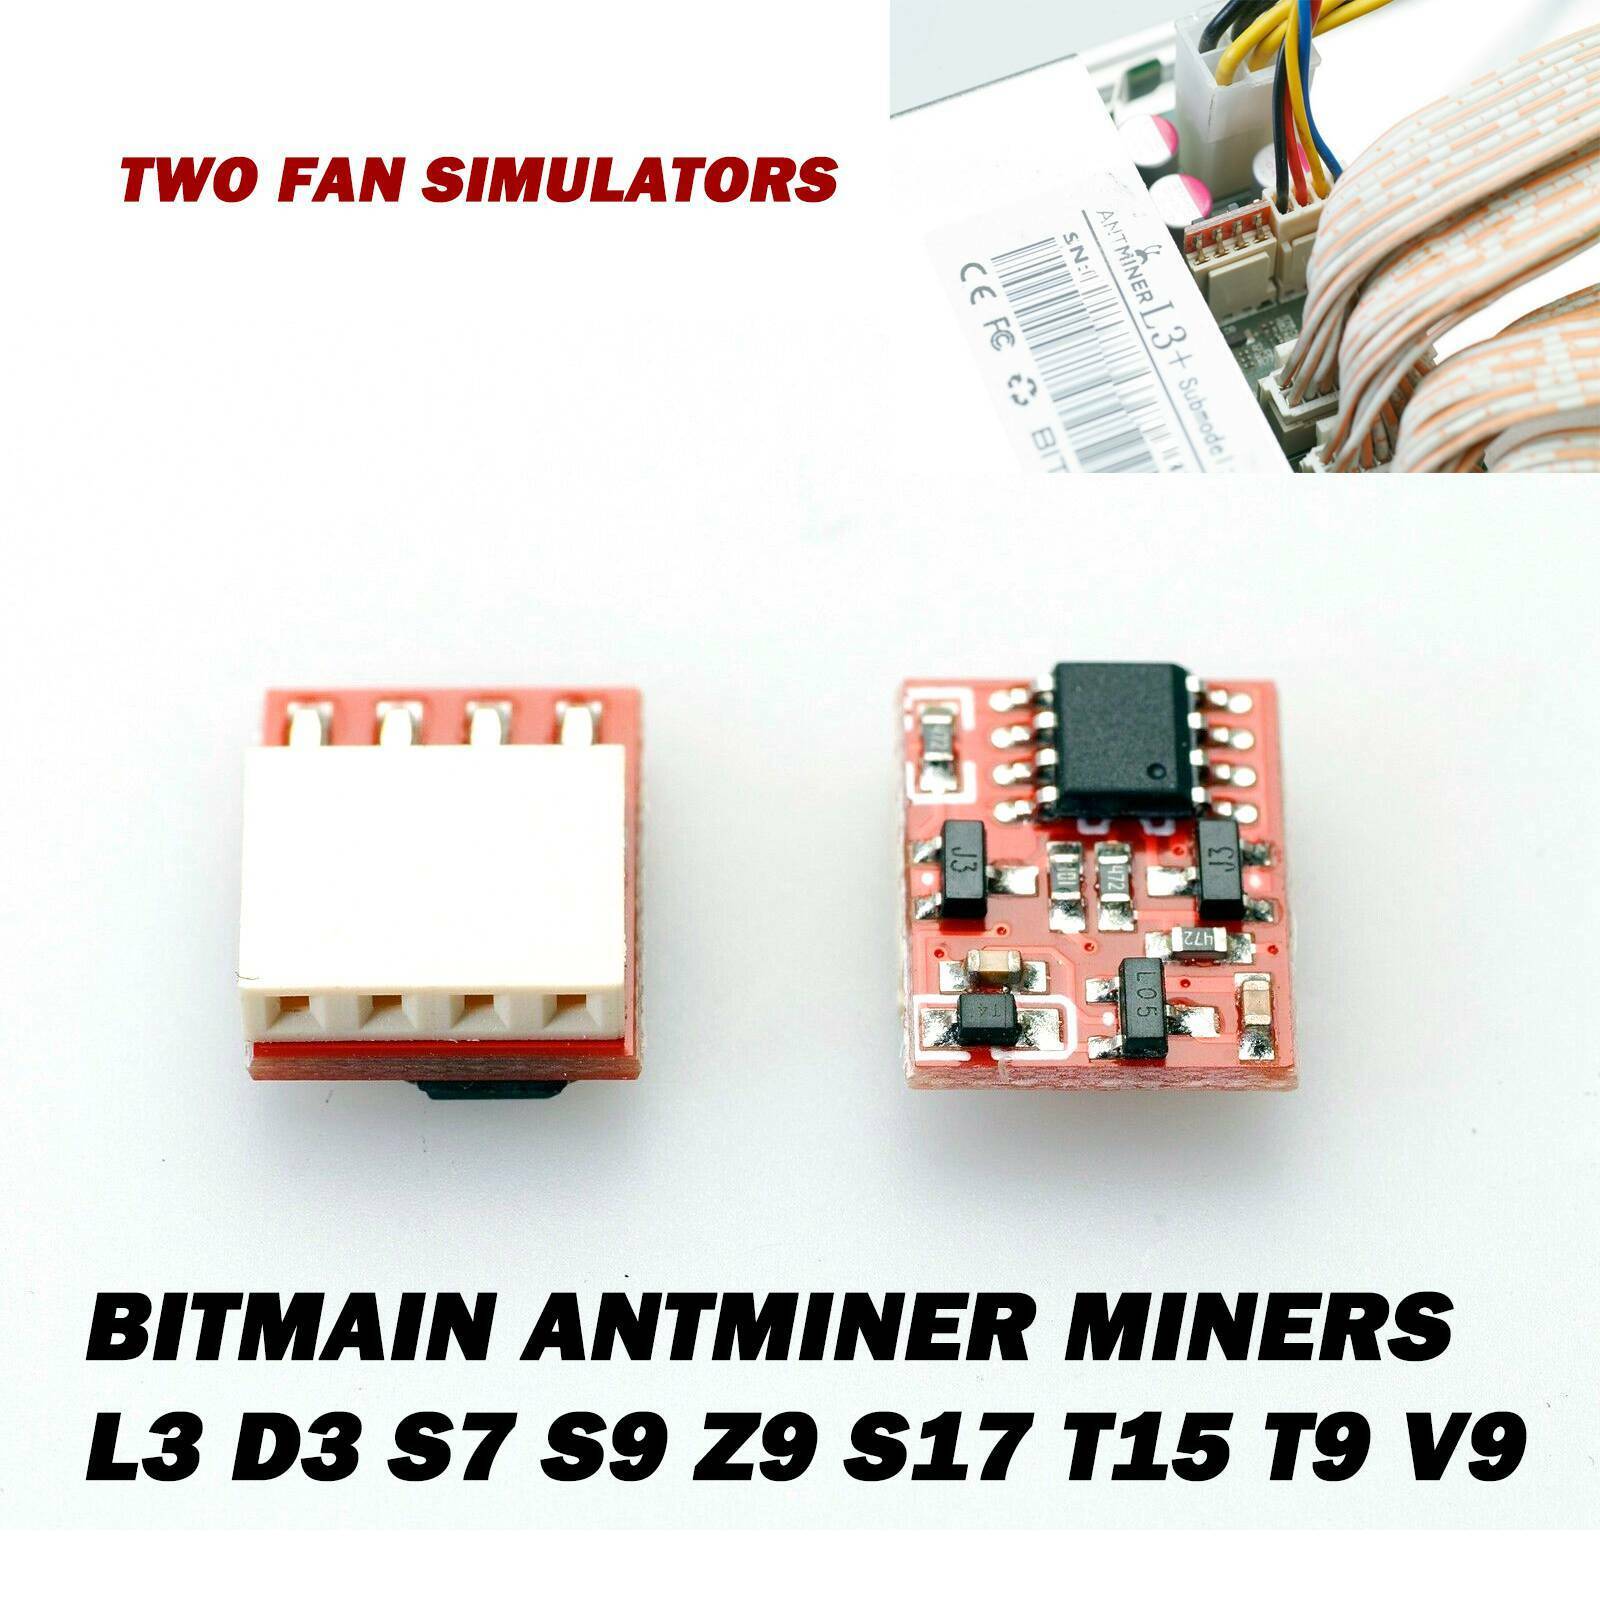 2Pcs Fan Simulators fit Bitmain Antminer Miner L3 D3 S7 S9 Z9 S17 T15 T9 V9 Unbranded Does not apply - фотография #3